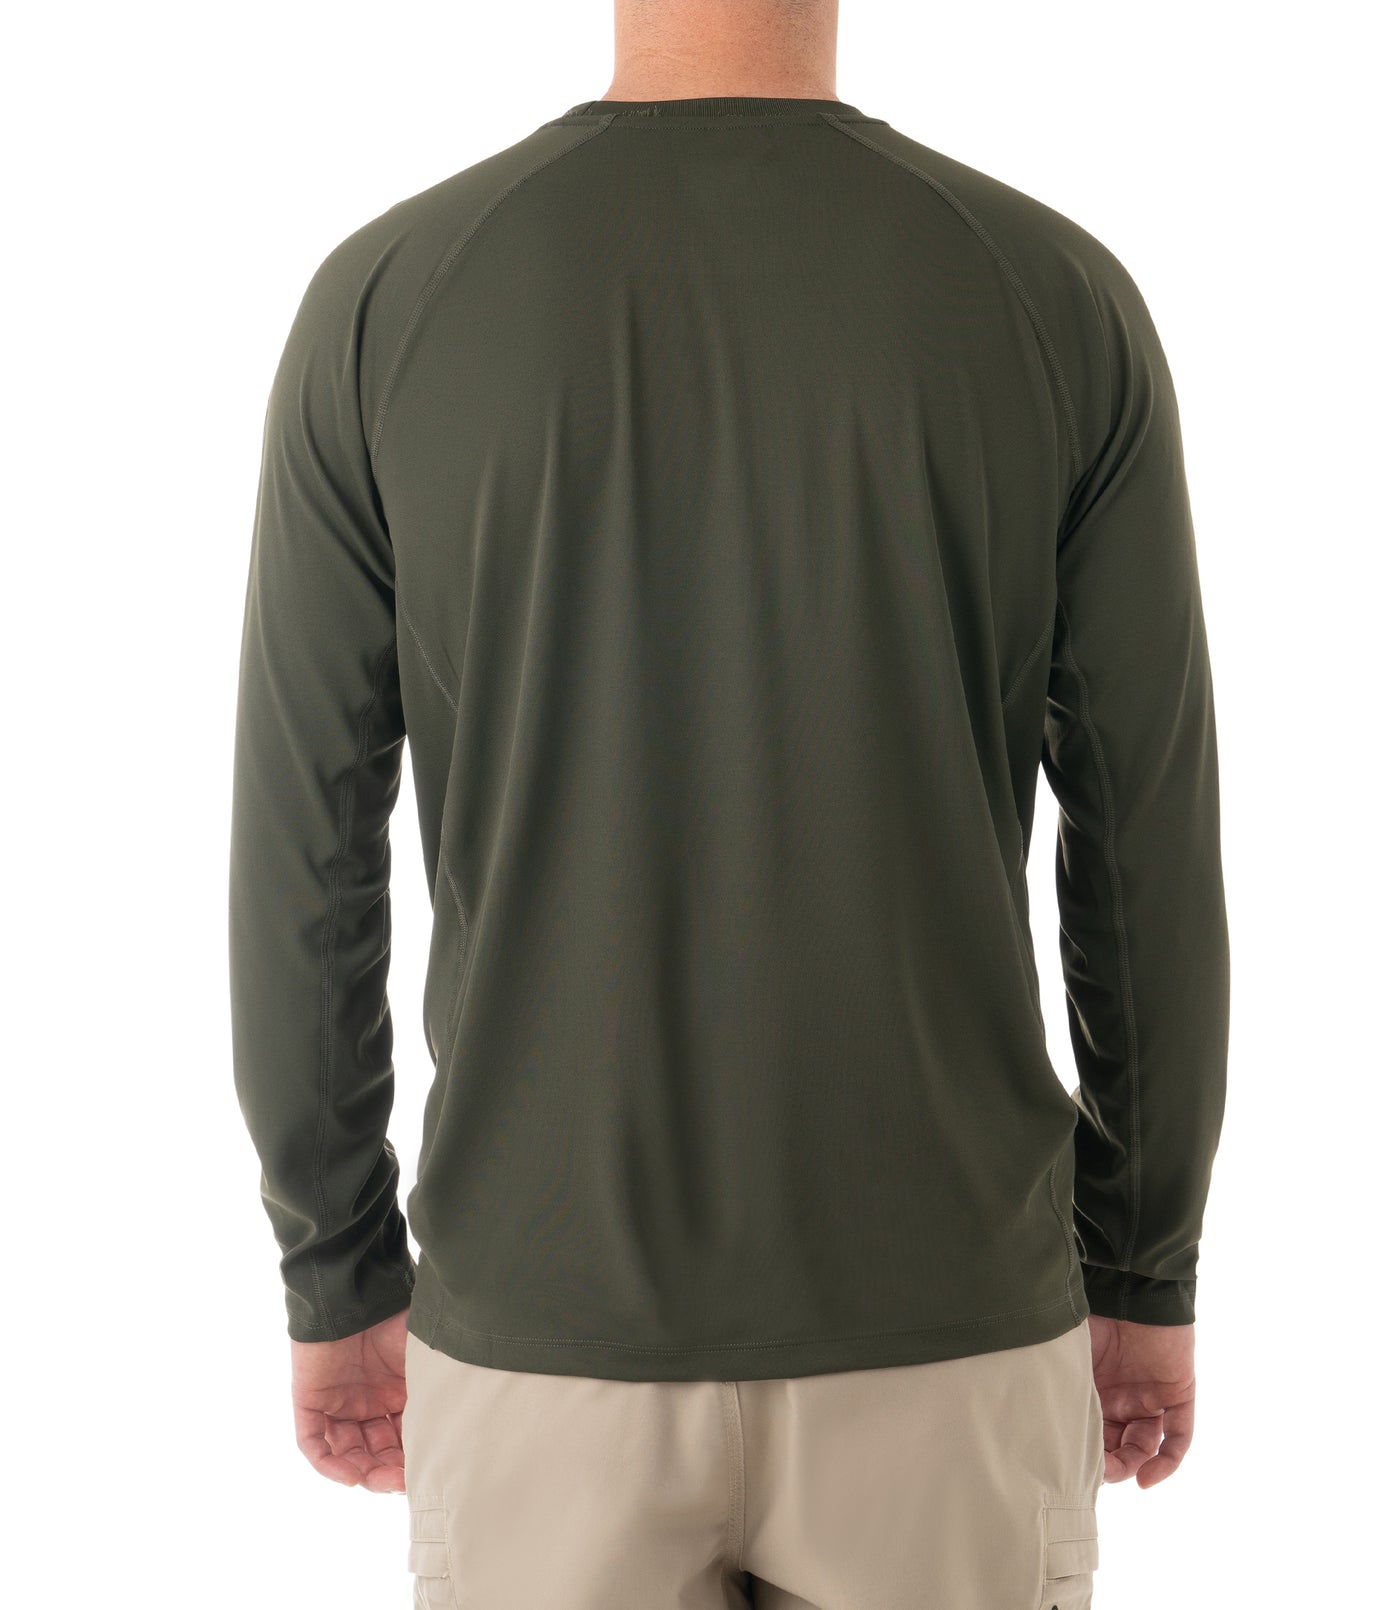 Back of Men's Performance Long Sleeve Shirt in OD Green